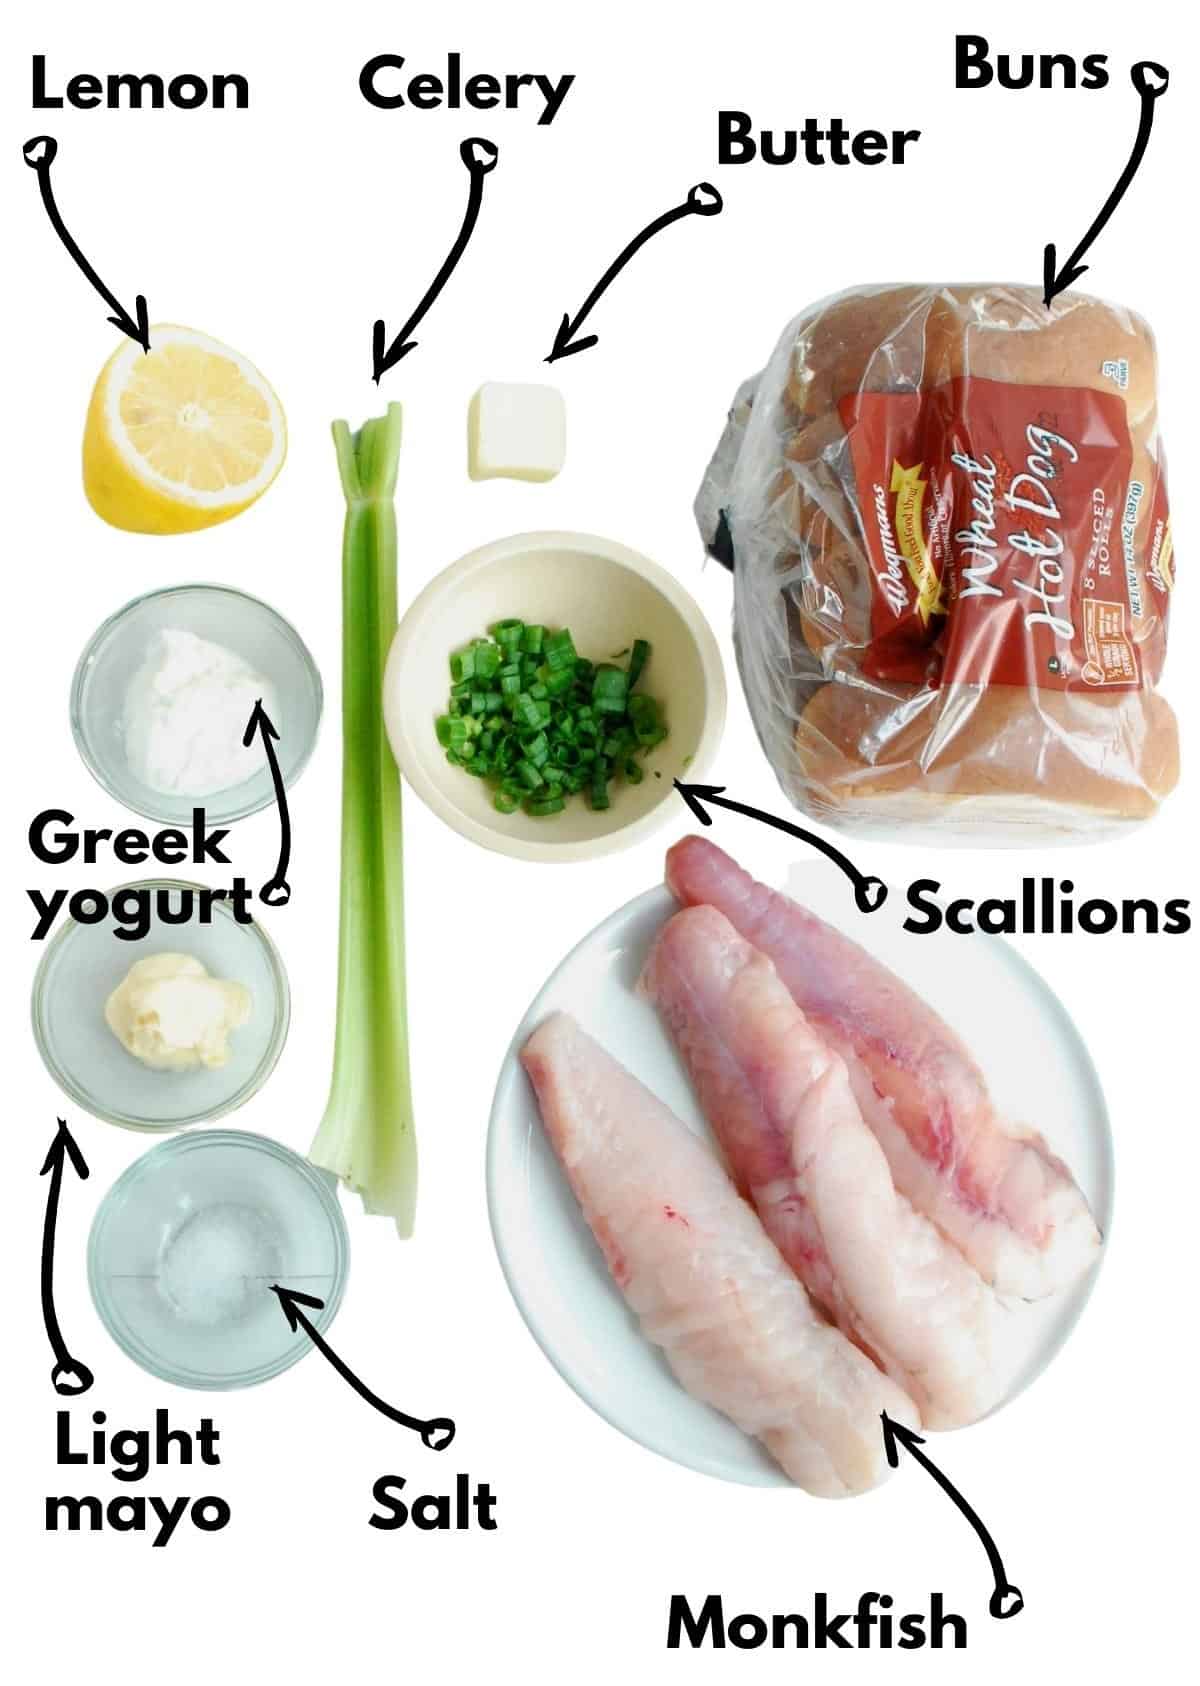 Monkfish, buns, butter, celery, lemon, scallions, greek yogurt, light mayo, and salt.